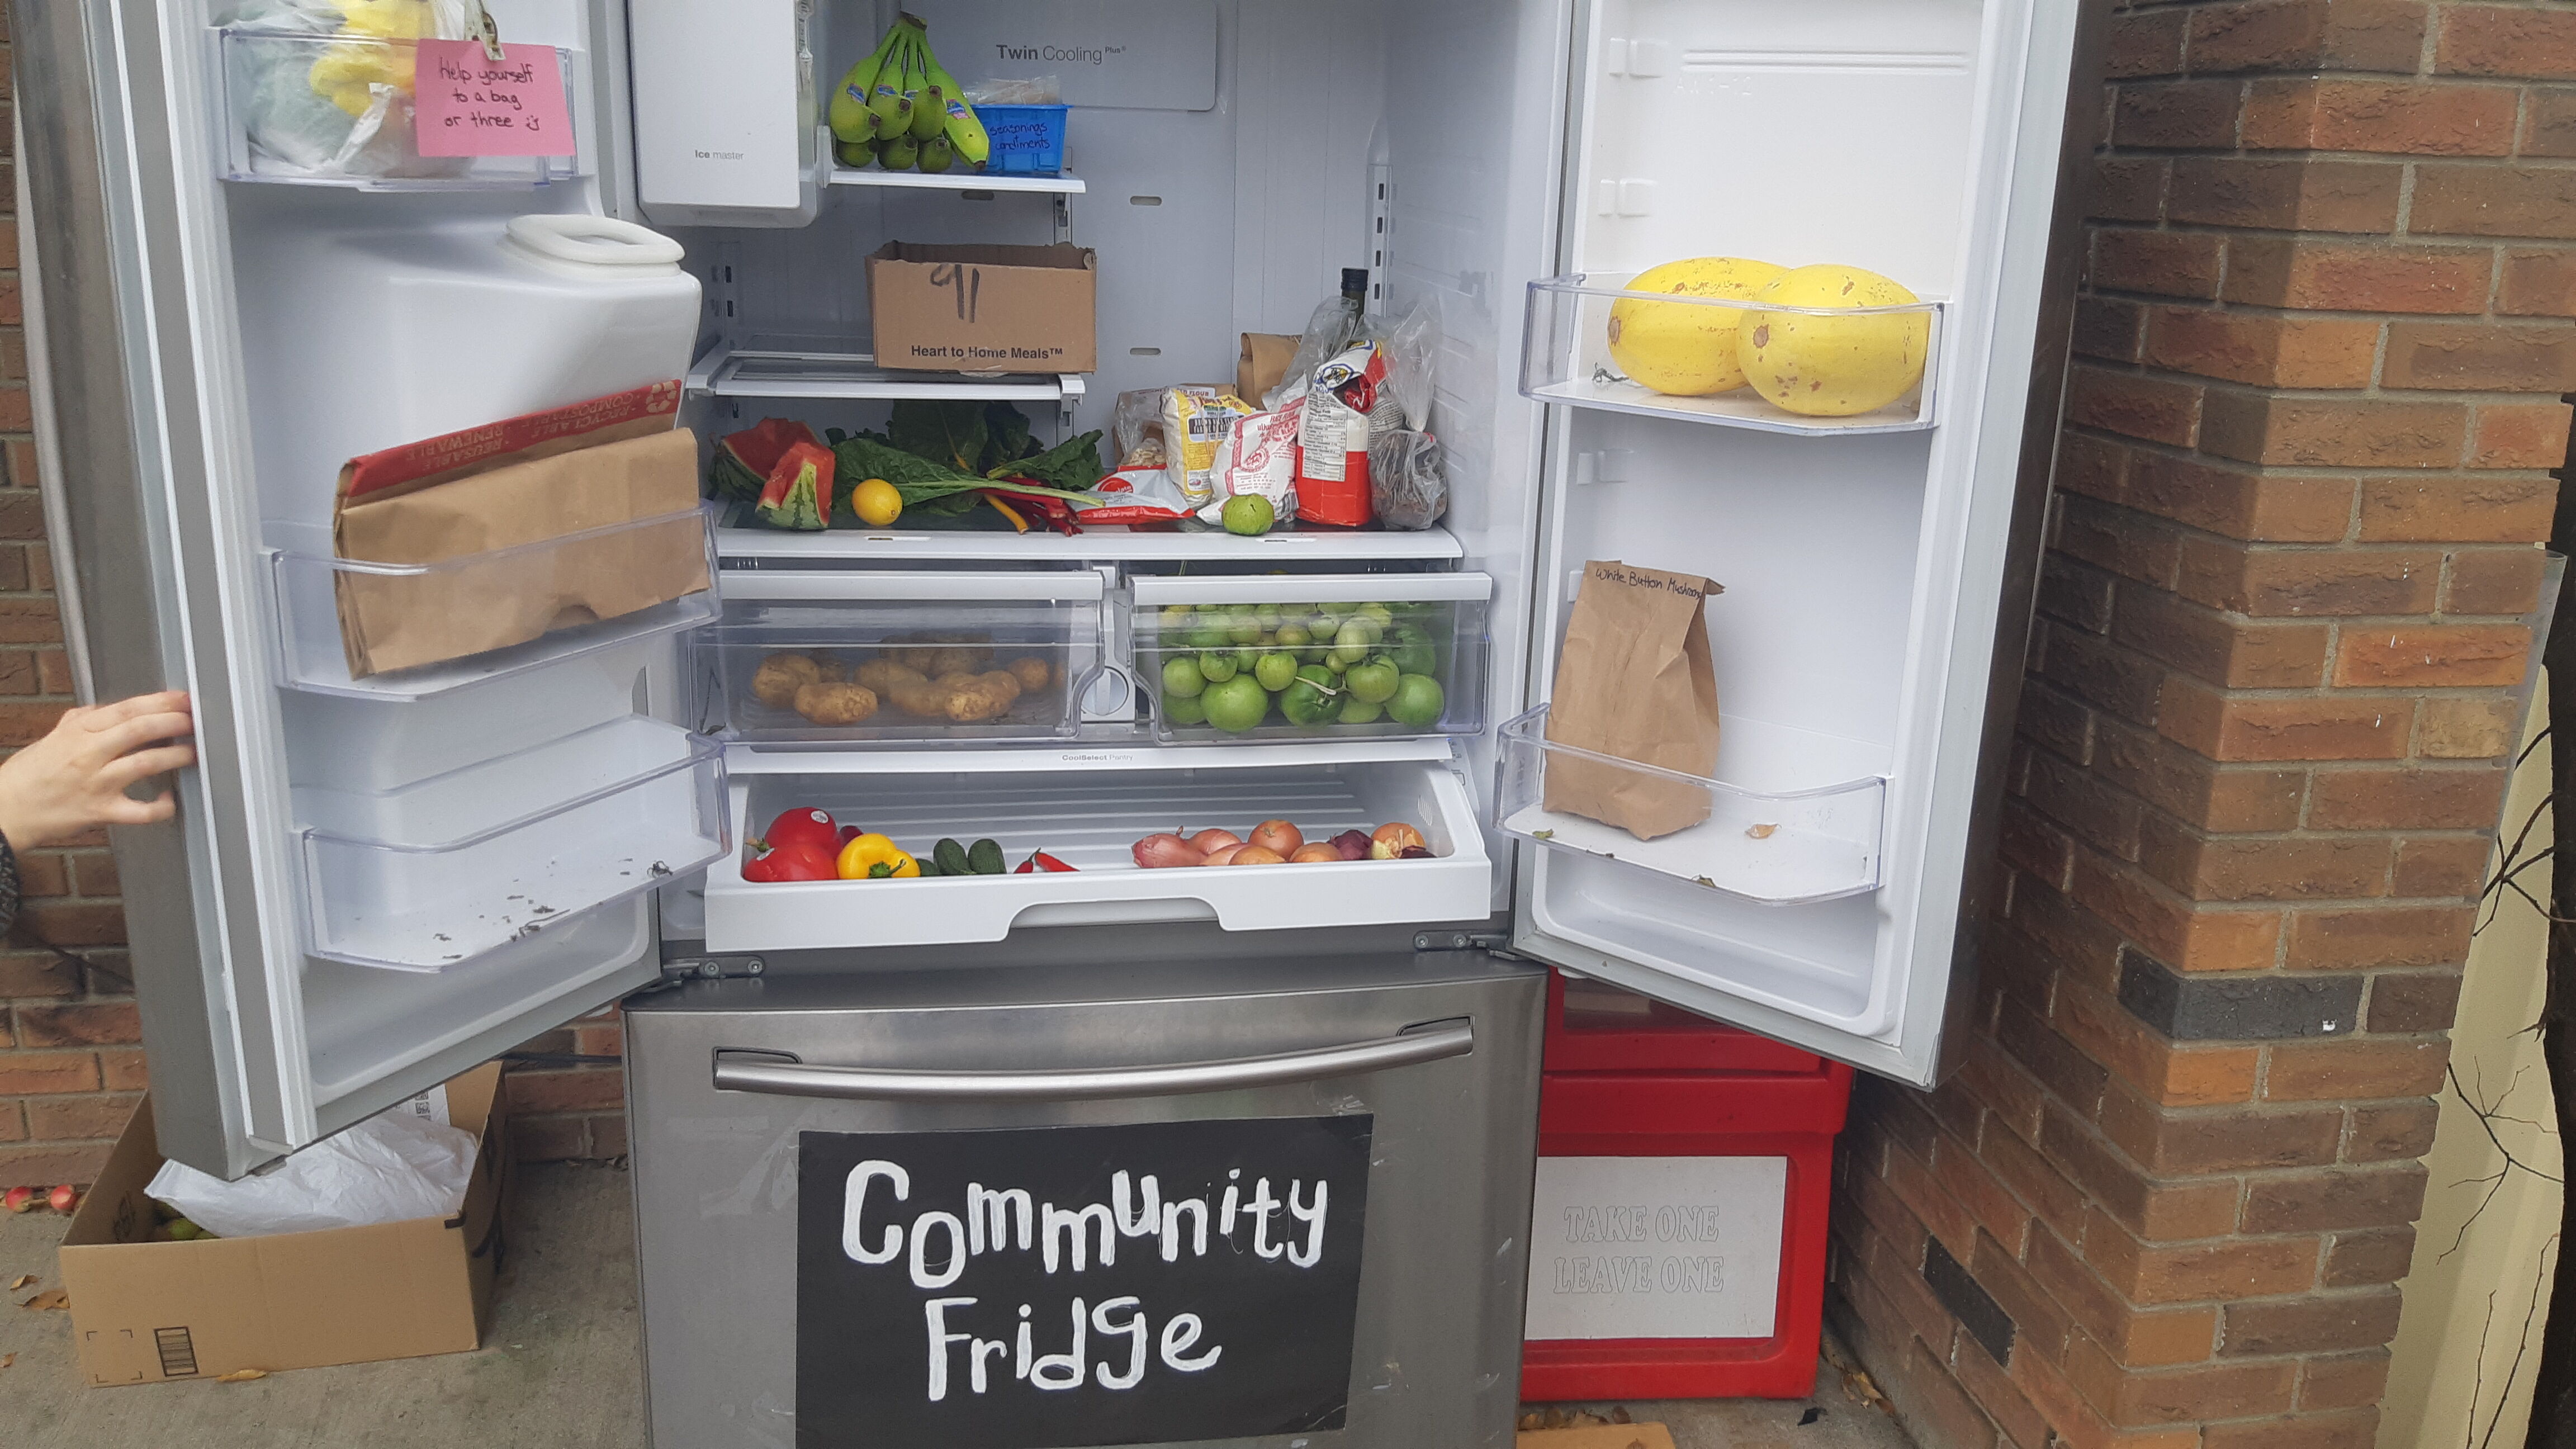 An image of a community fridge full with fresh produce.